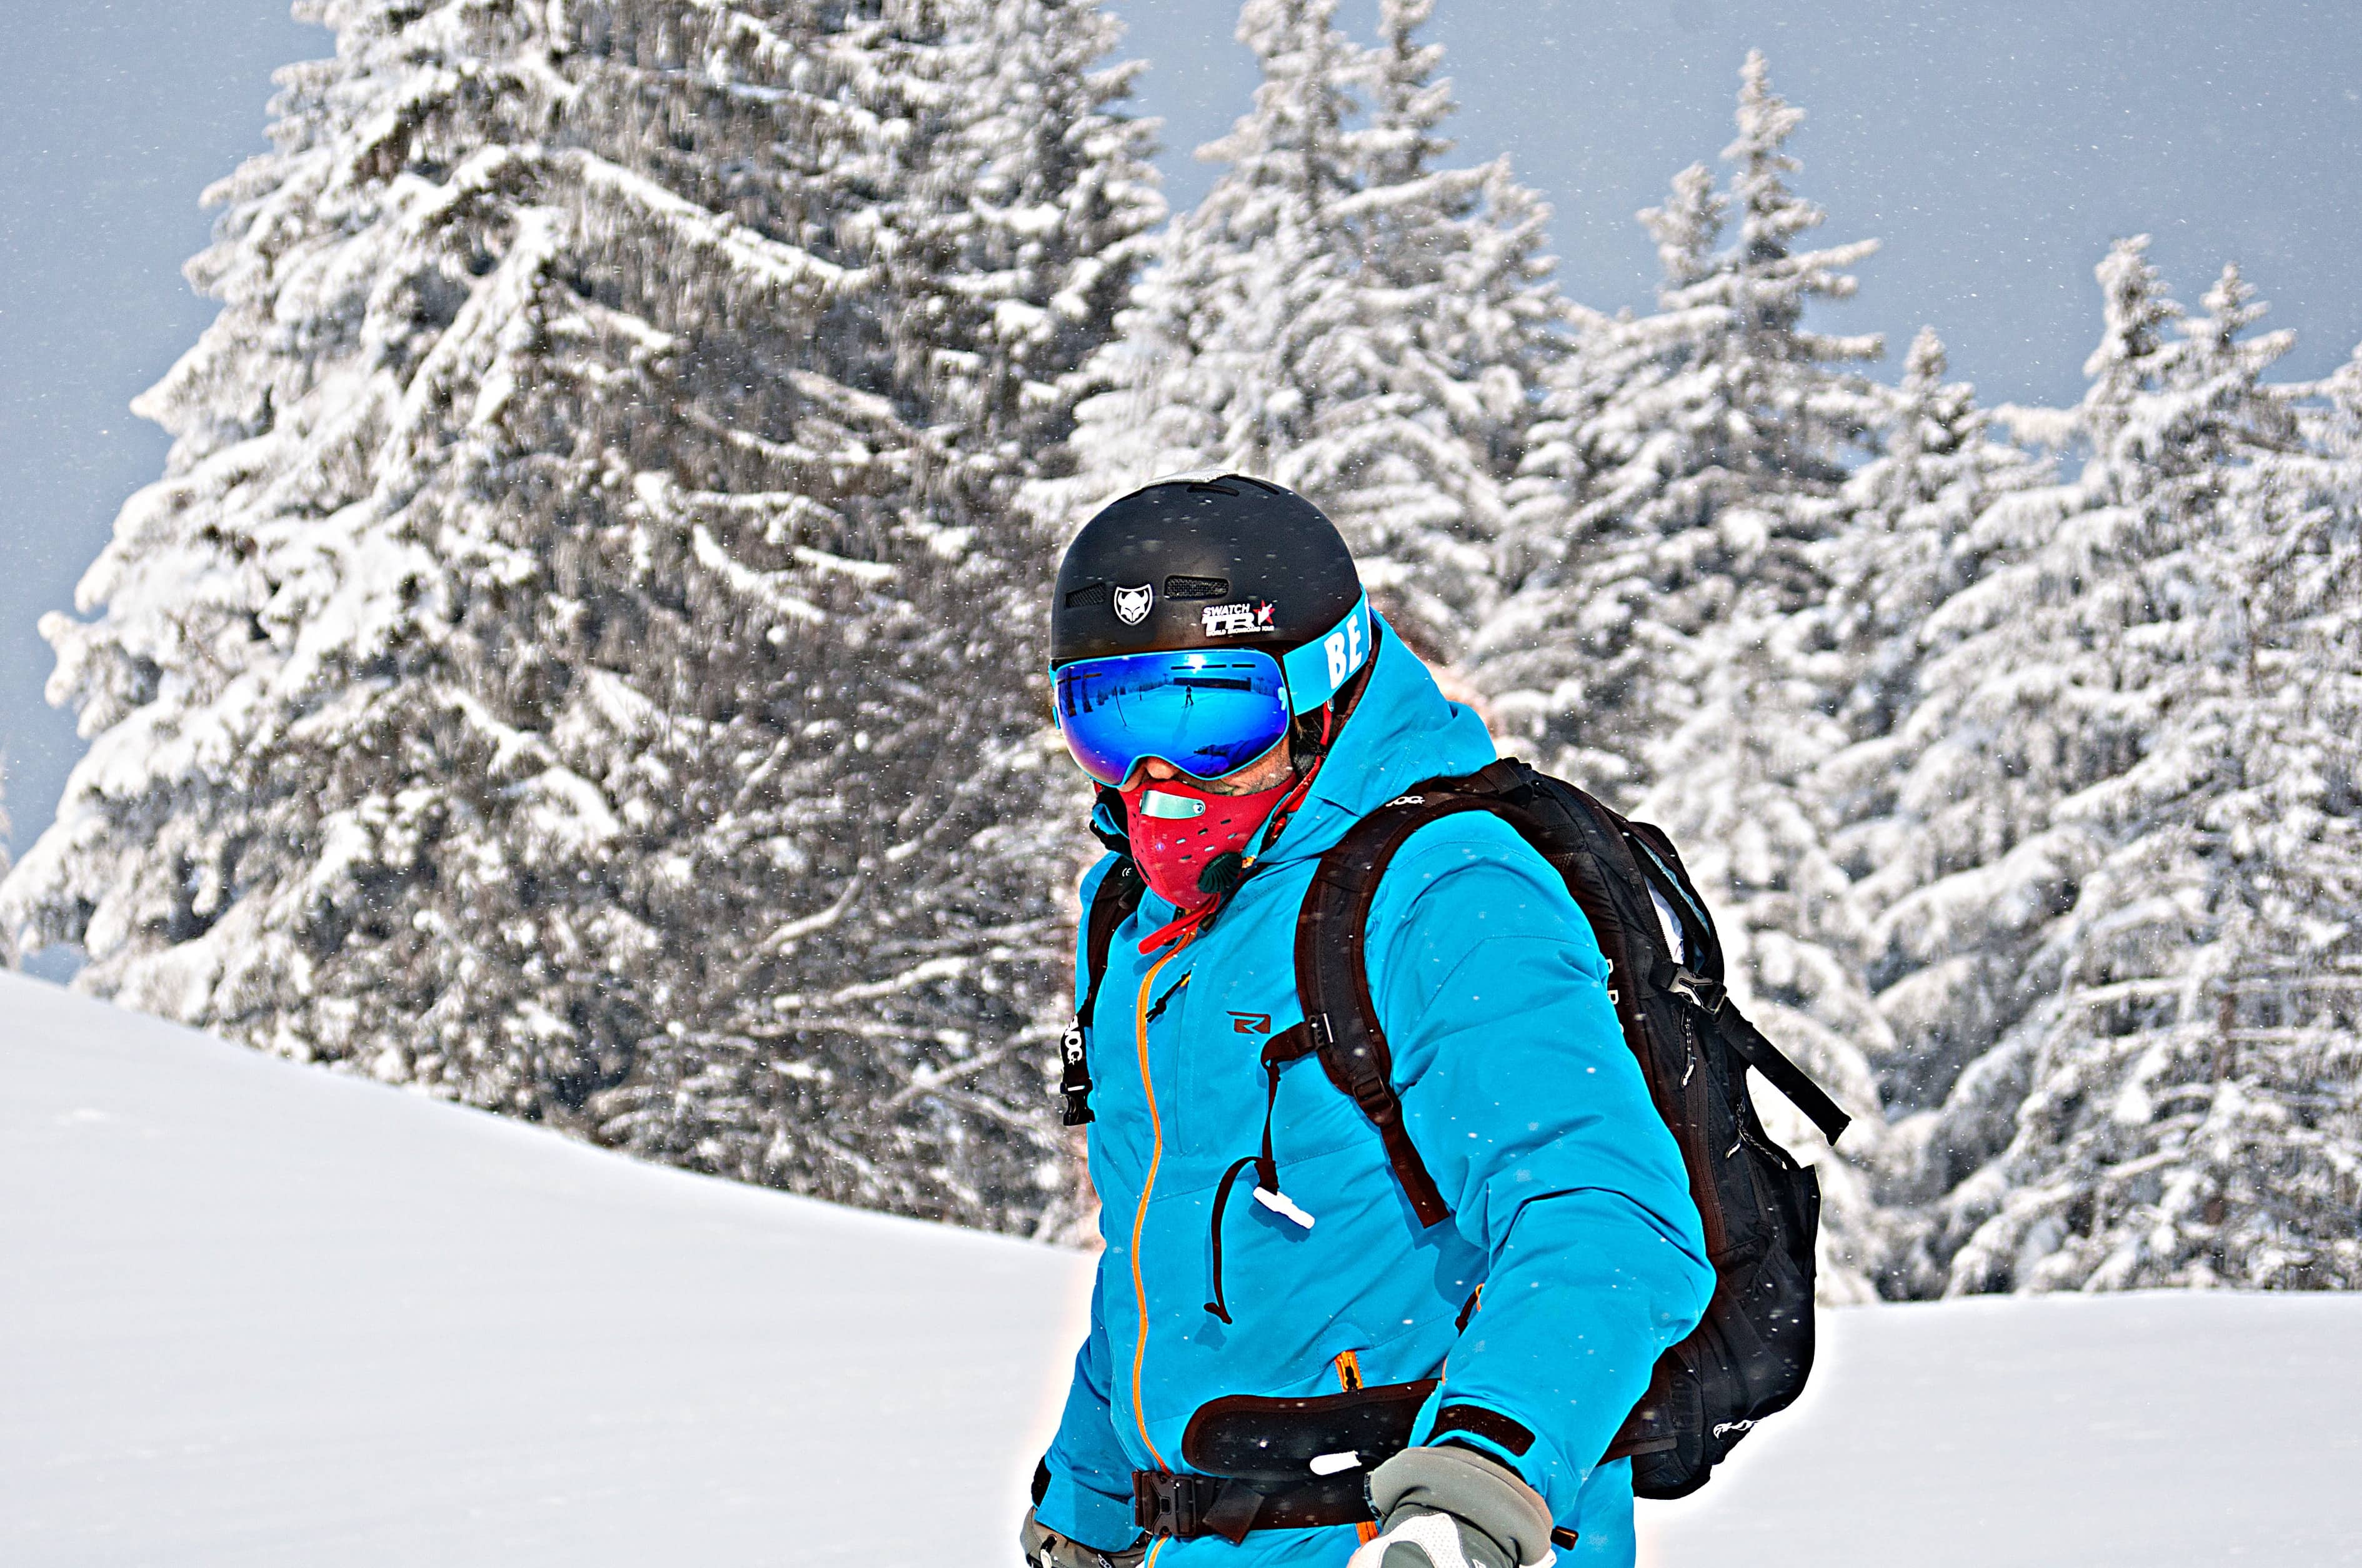 Skier dressed in blue ski gear on mountain